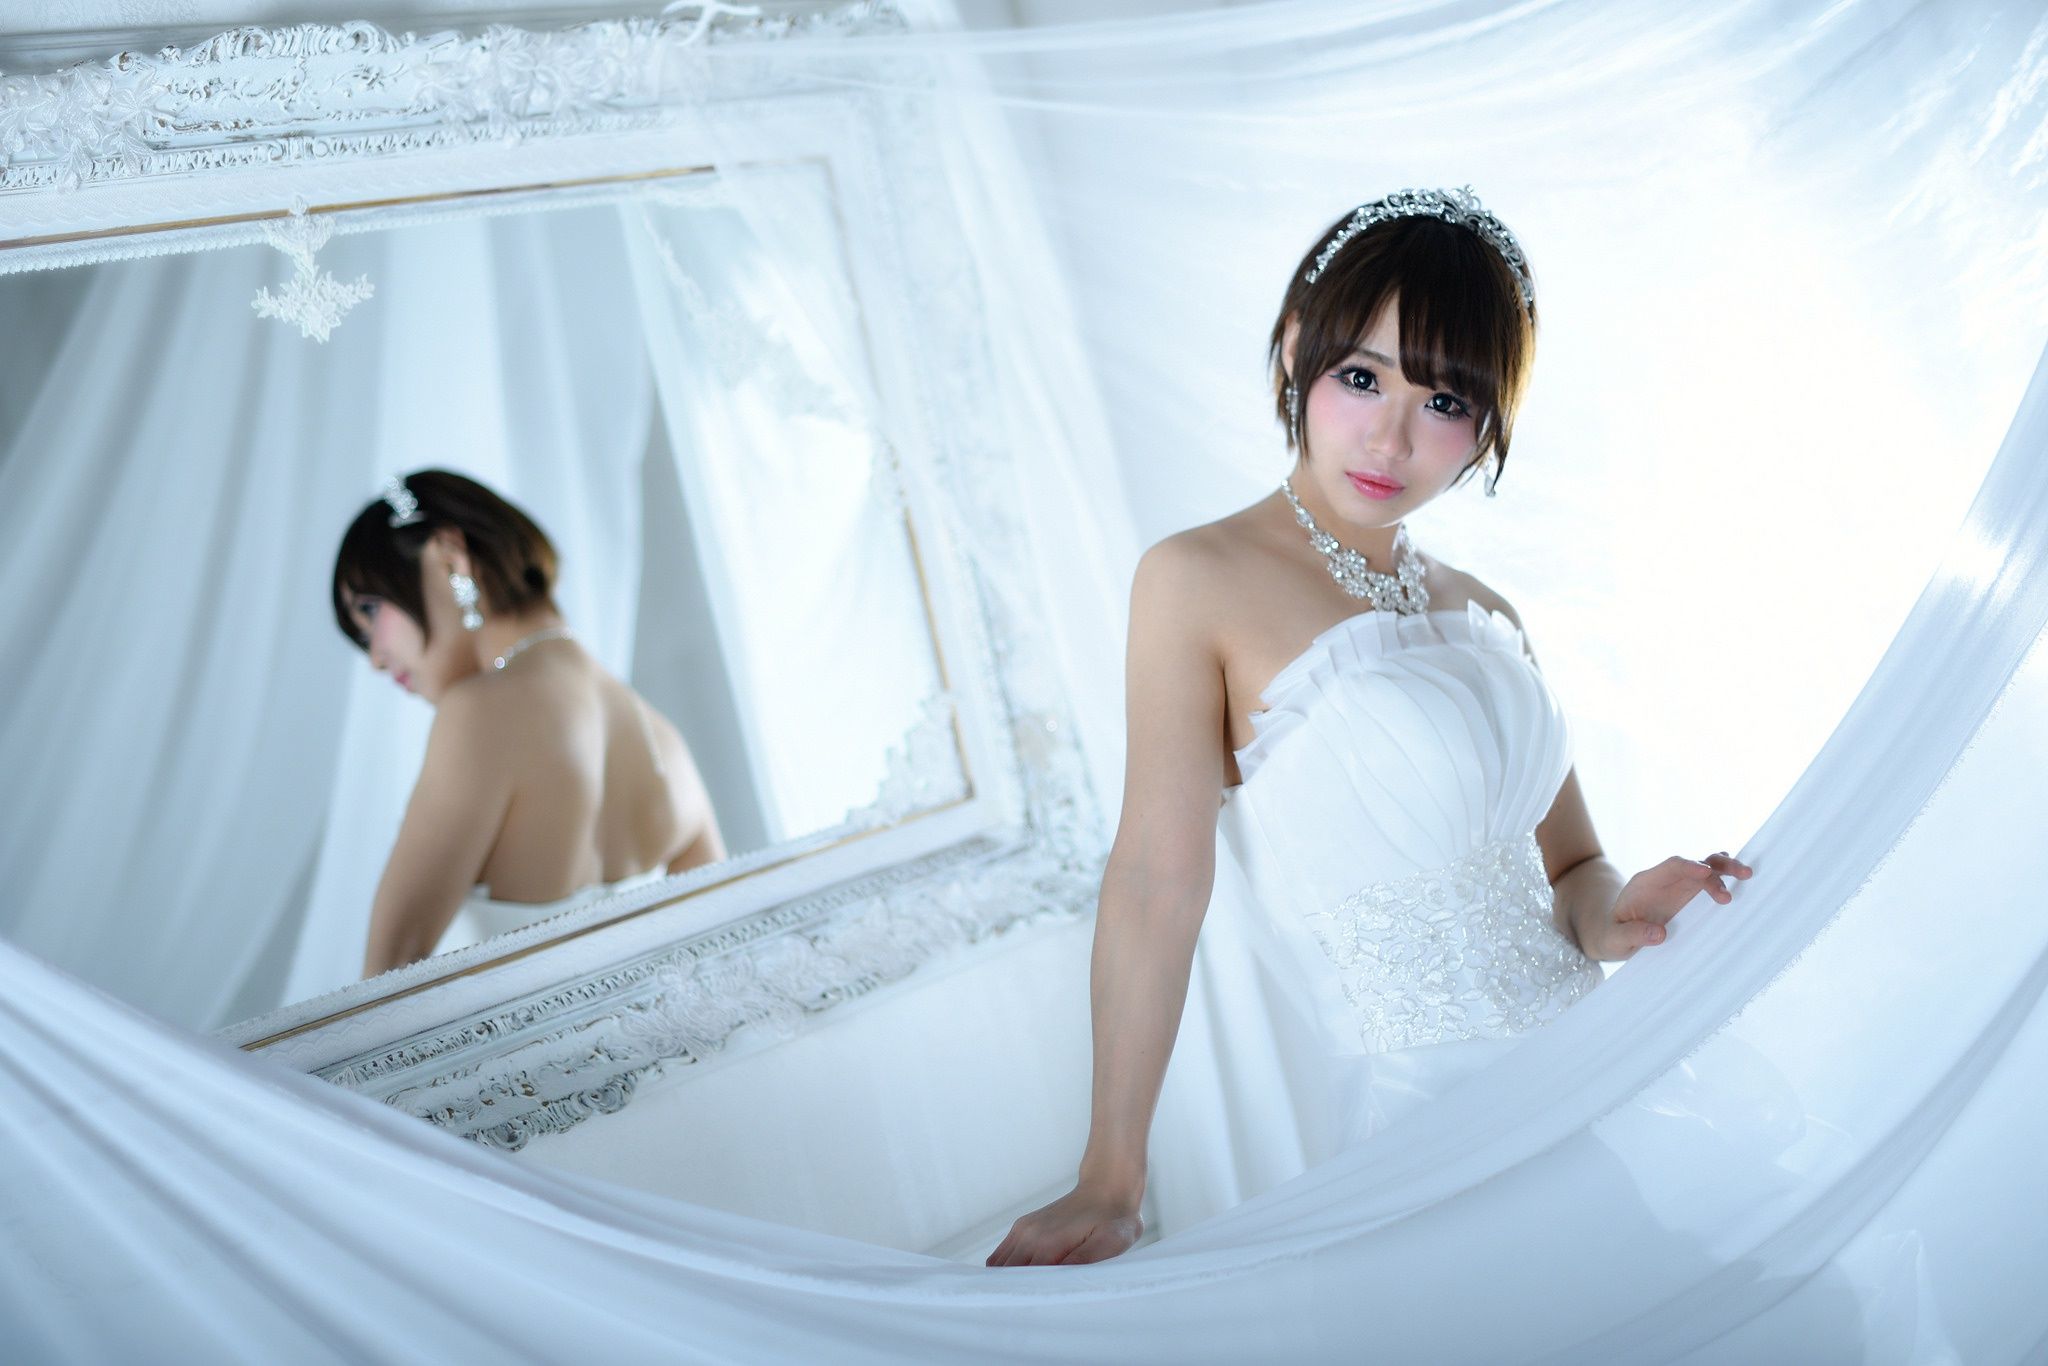 Women Bride Woman Model Girl Asian Mirror Reflection Necklace